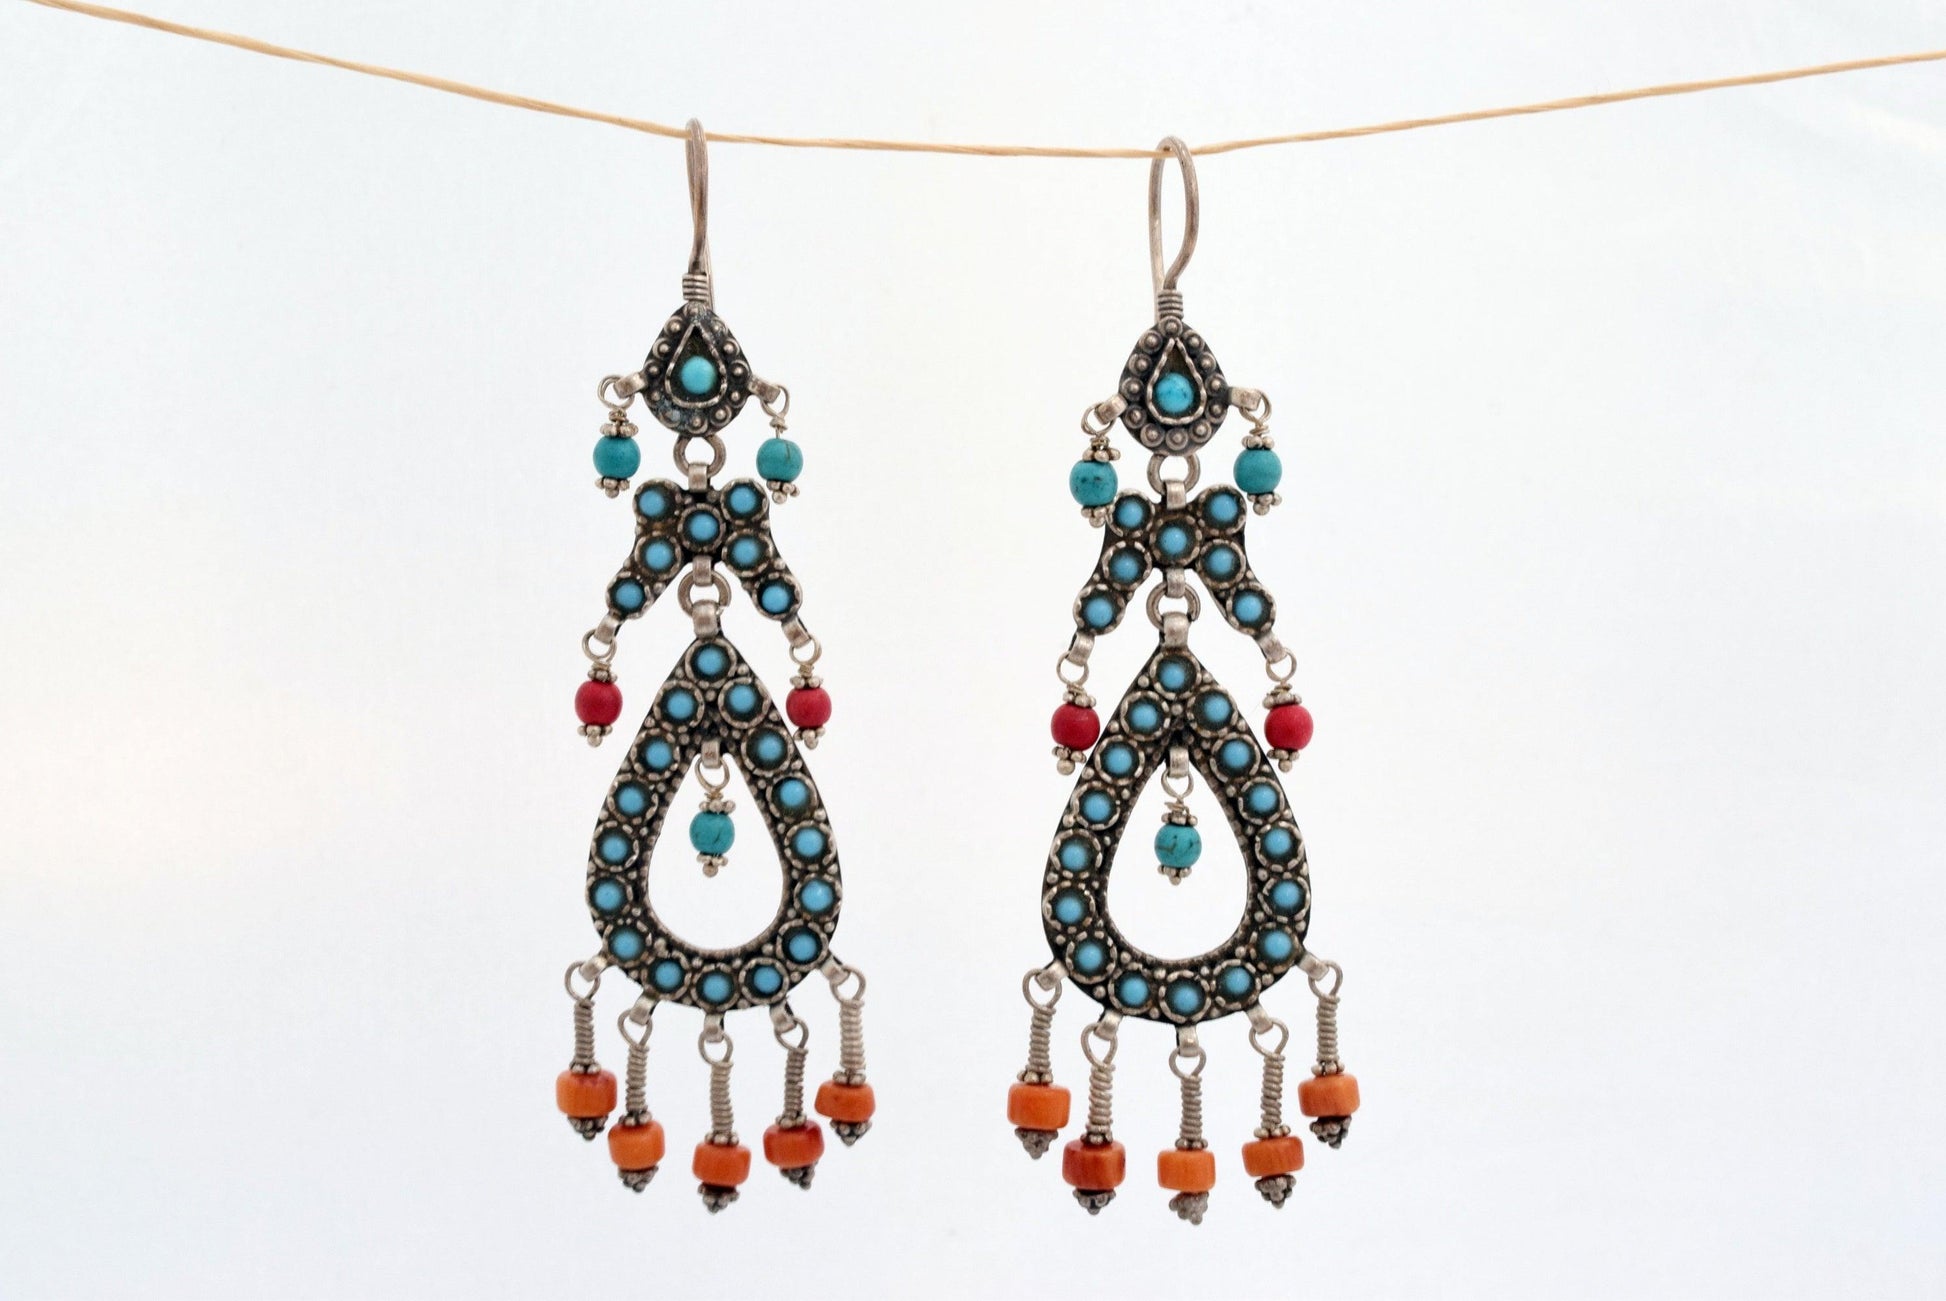 Uzbek style earrings